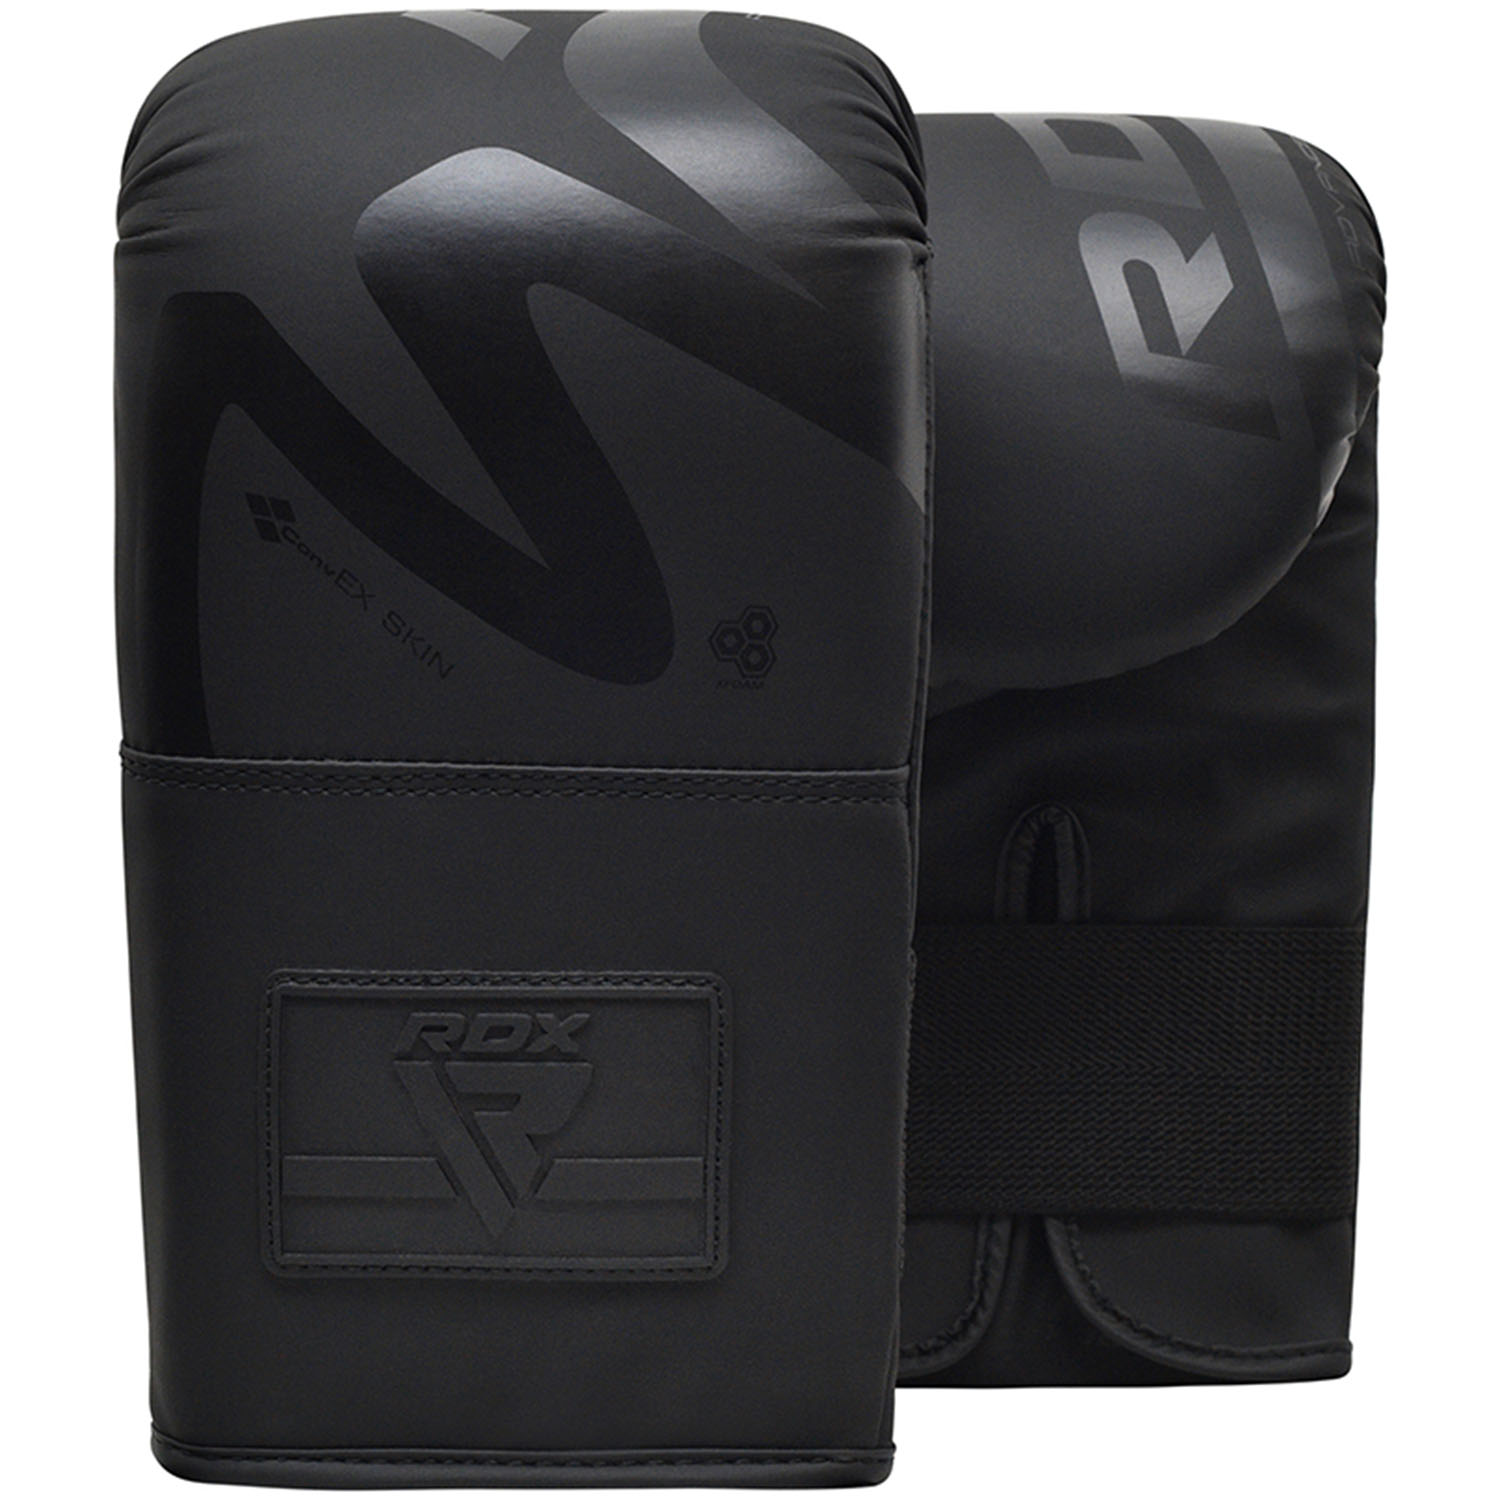 RDX Boxing Bag Gloves, Noir Series F15, black-matt